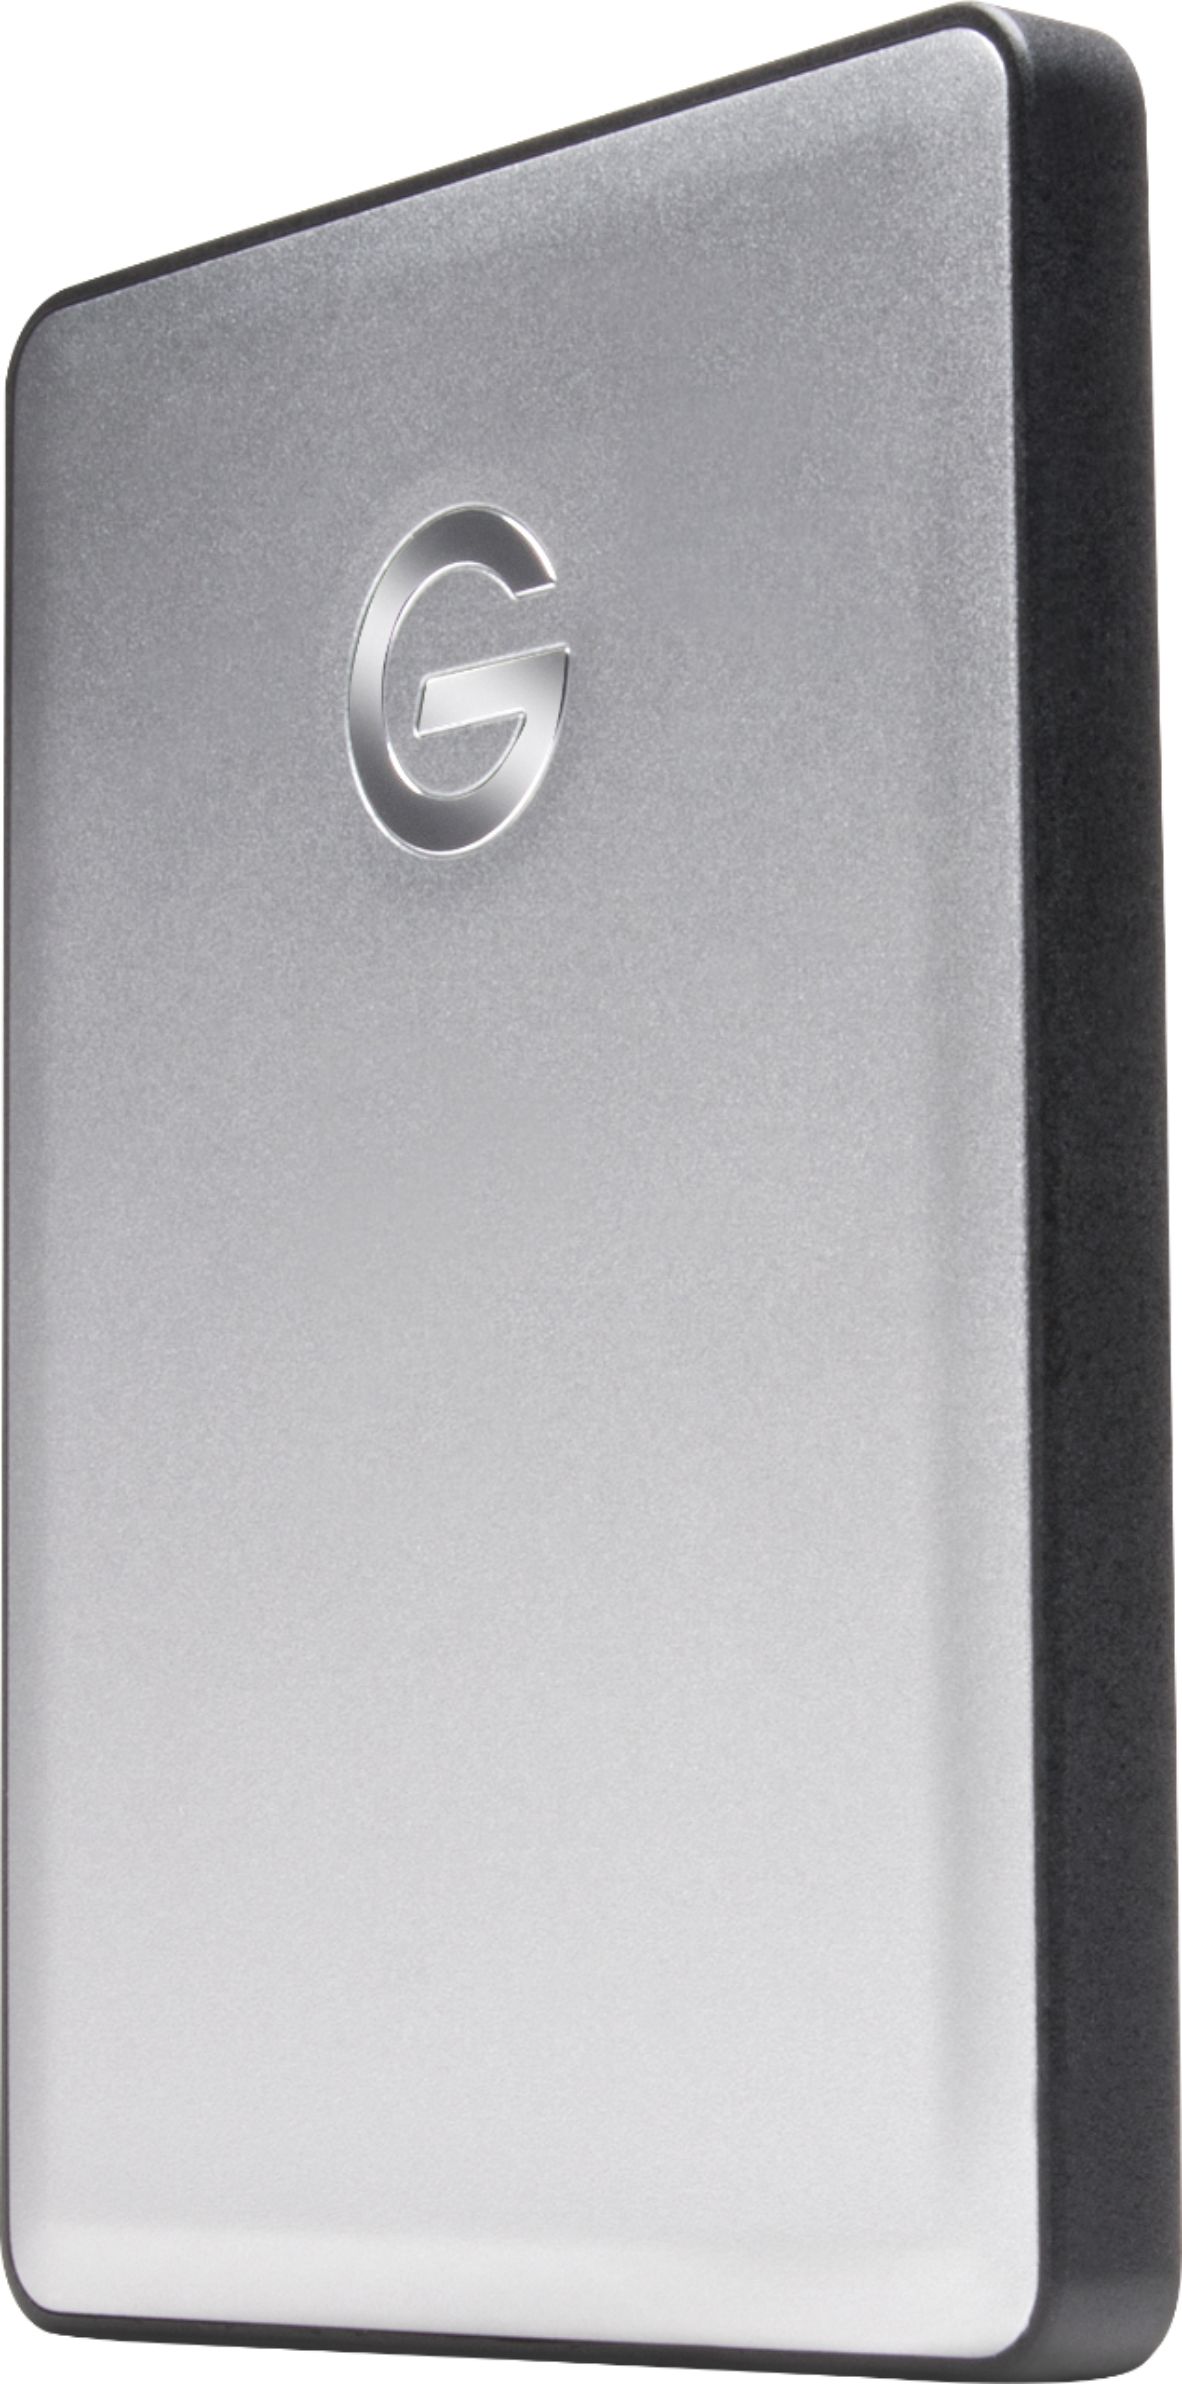 G-Technology G-DRIVE Mobile USB-C External USB 3.1 Gen 1 Portable Drive Space Gray 0G10317 - Best Buy